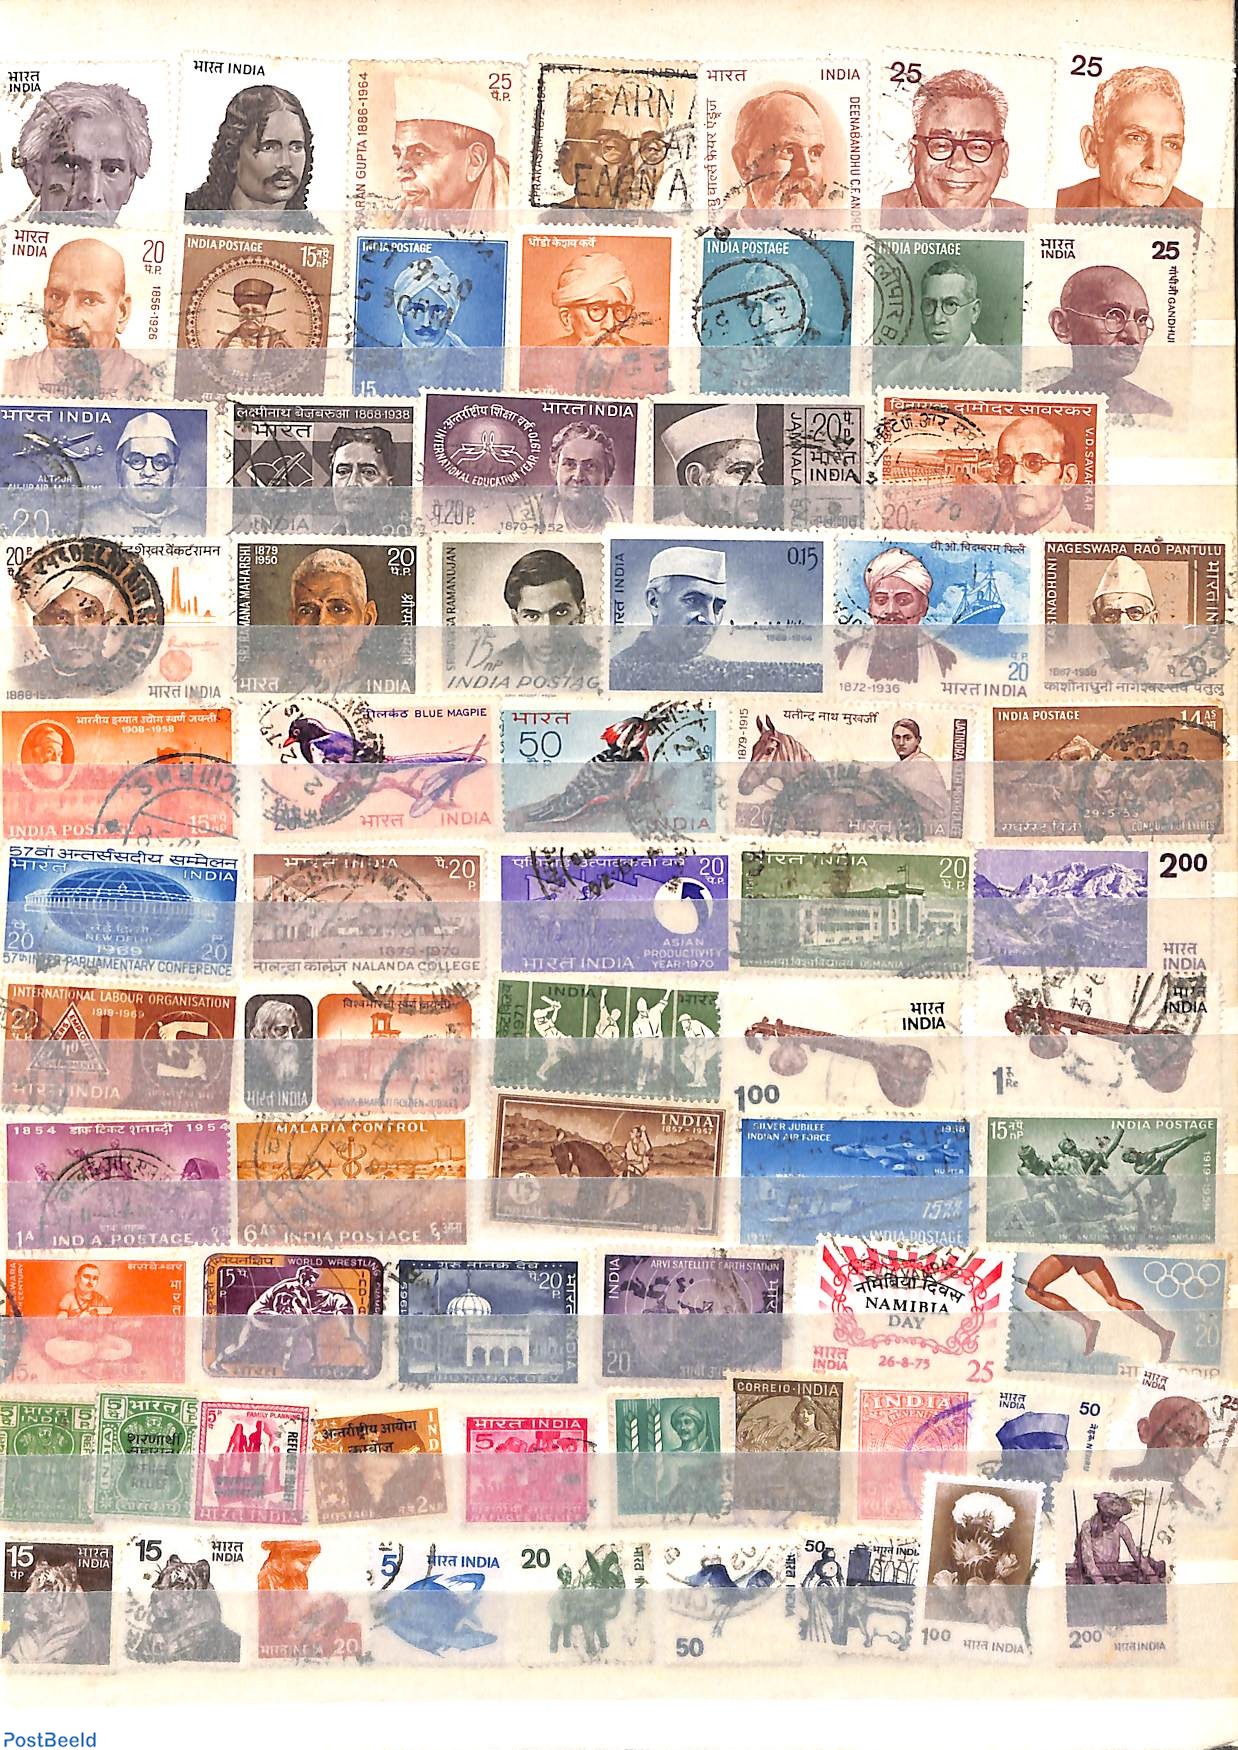 Buy Japan Original Vintage Postage Stamps 1960-62 Female Figure, Parks for  the Collector, Artist or Crafter Online in India 